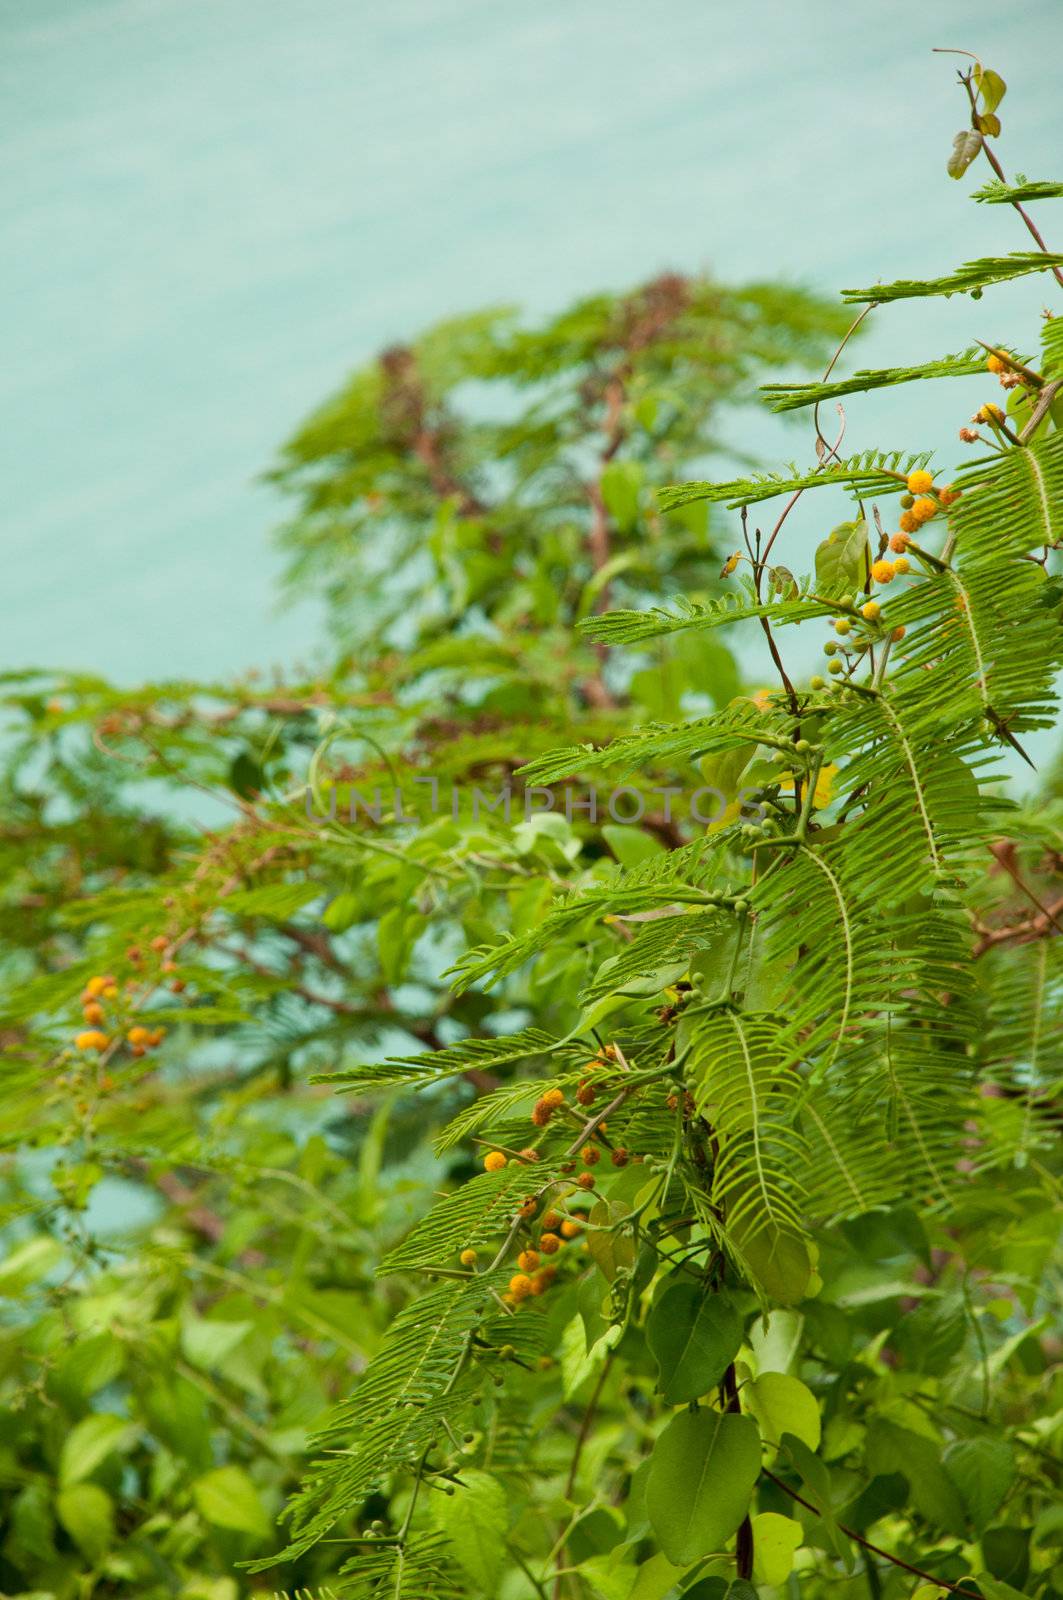 Mimosa (Acacia Dealbata), evergreen shrub at a lagoon (Antigua, Caribbean)